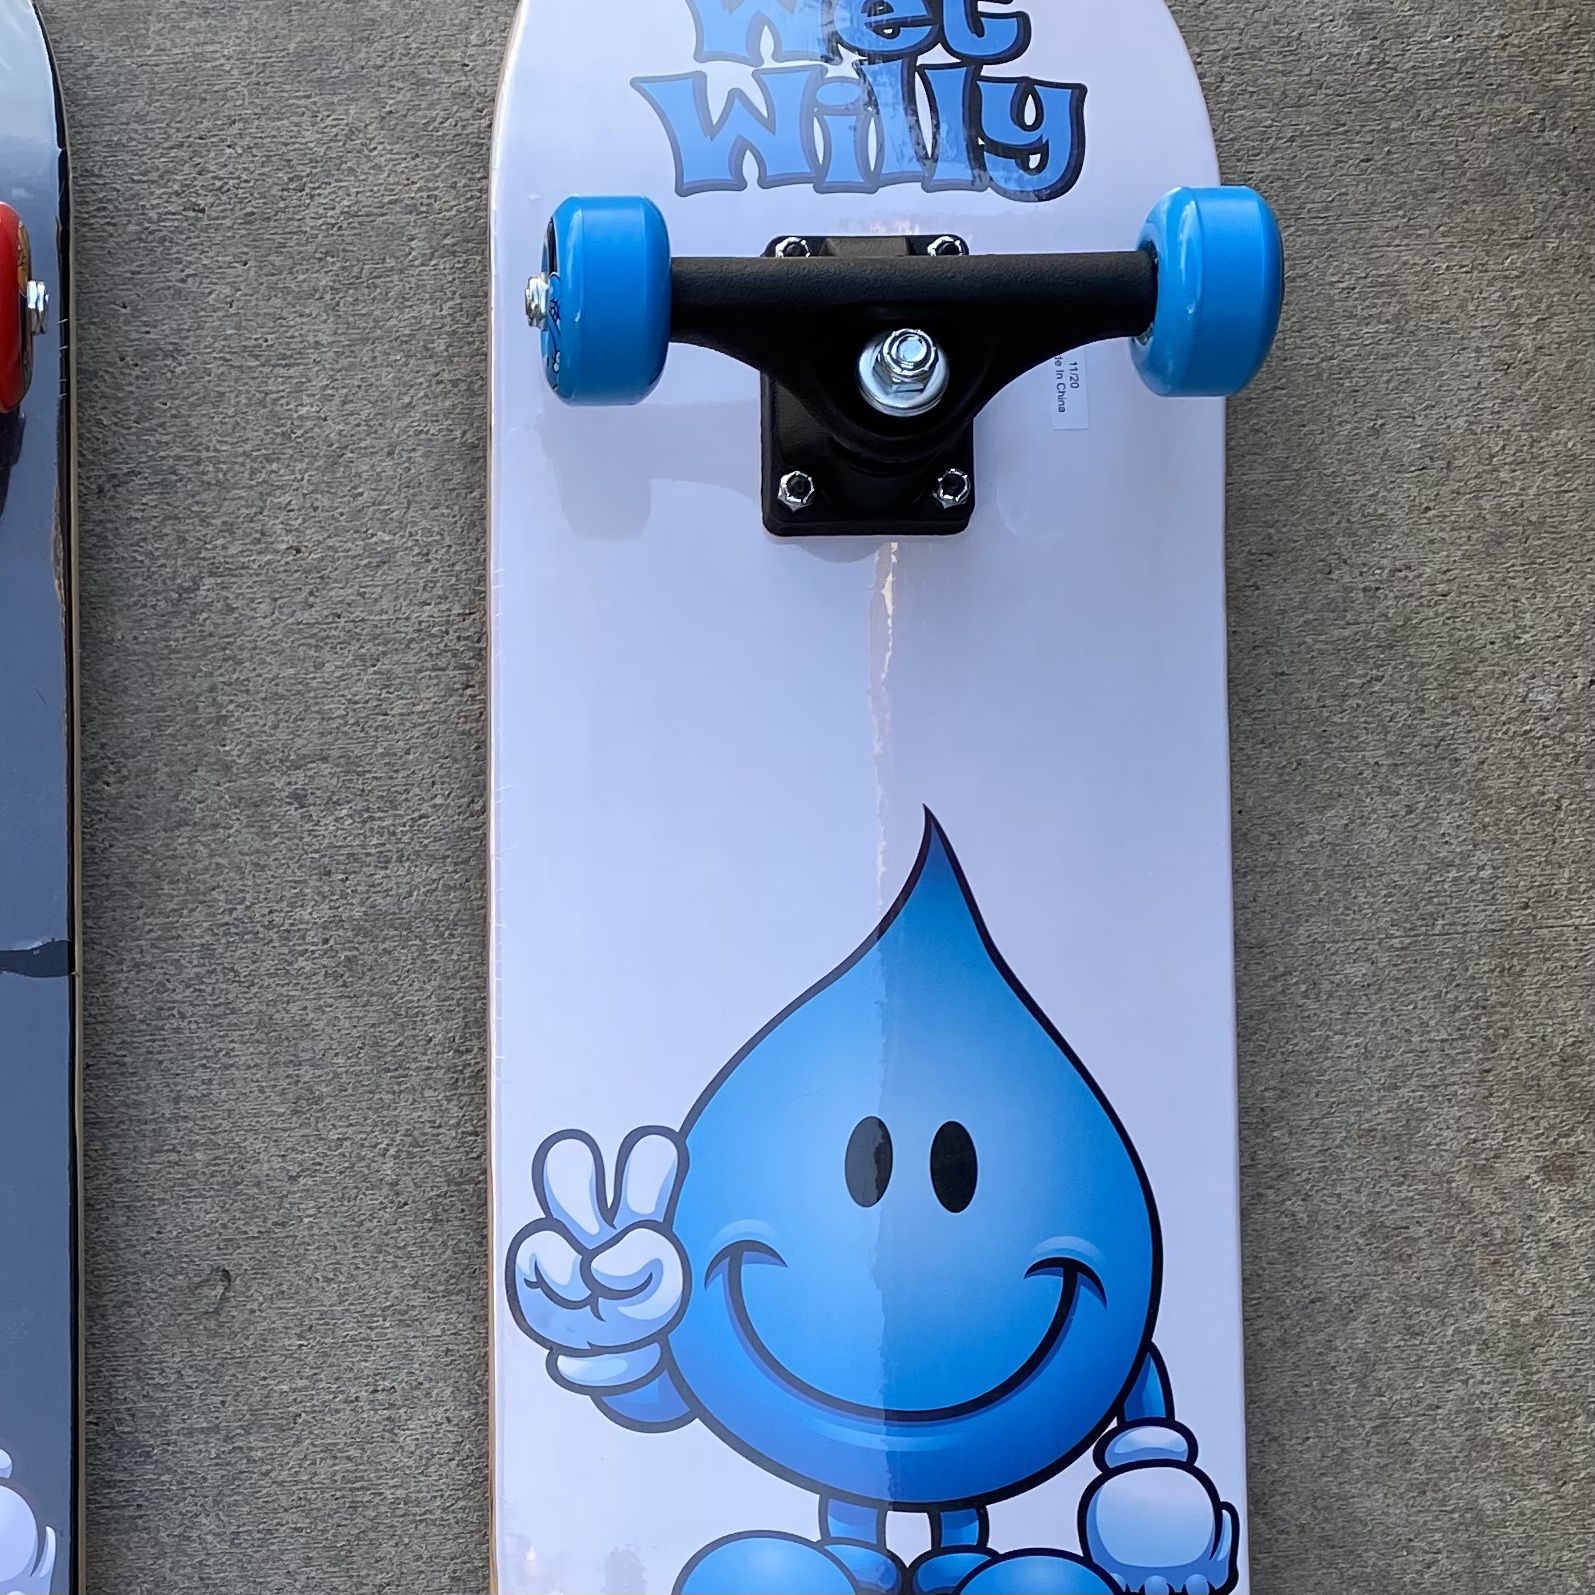 World Industries Wet Willy Skateboard